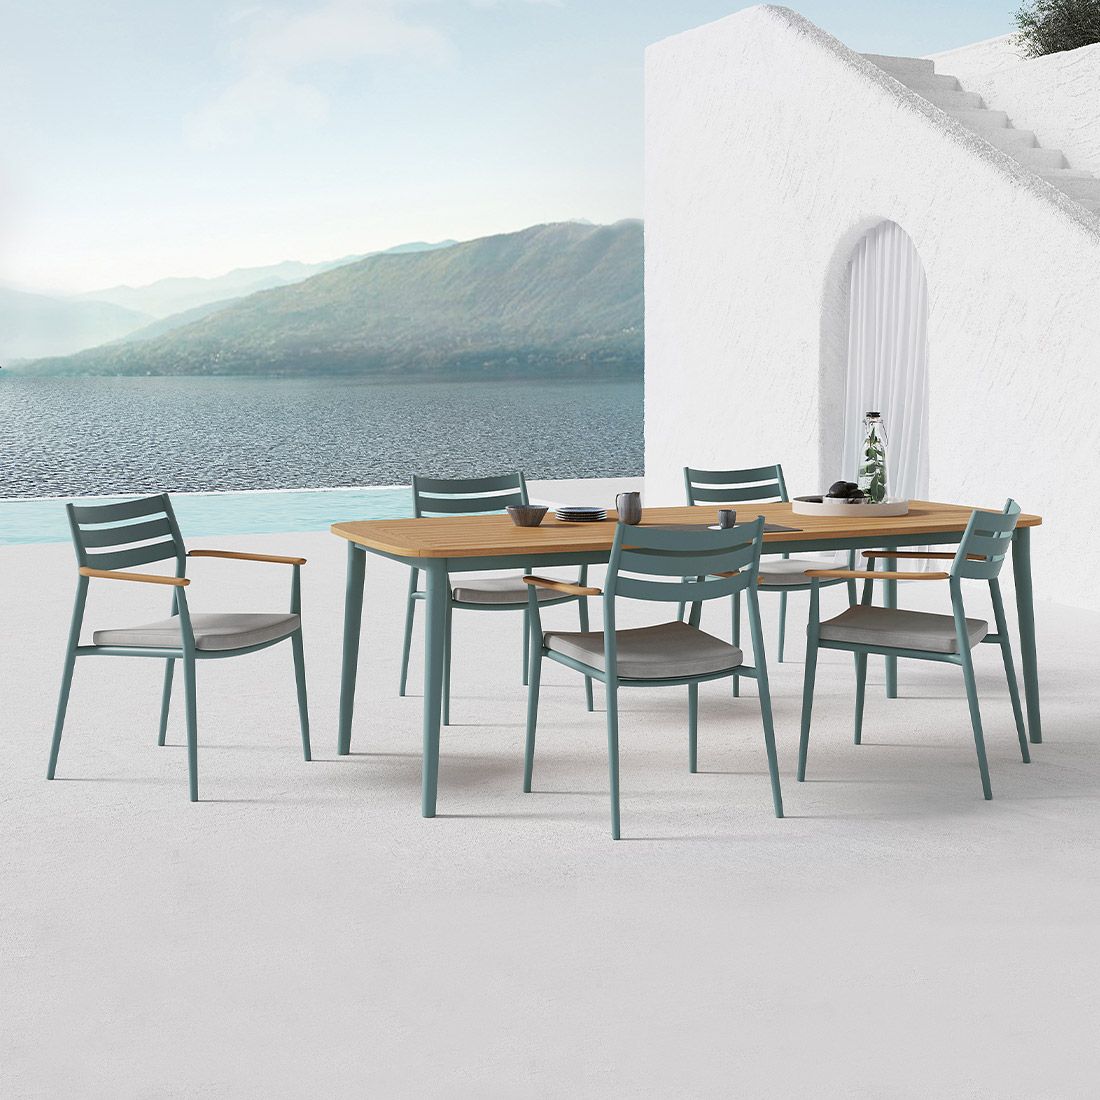 Tisch mit Pia 7-tlg. Solpuri Petrol/Natur Gartenmöbel-Set 170x100cm